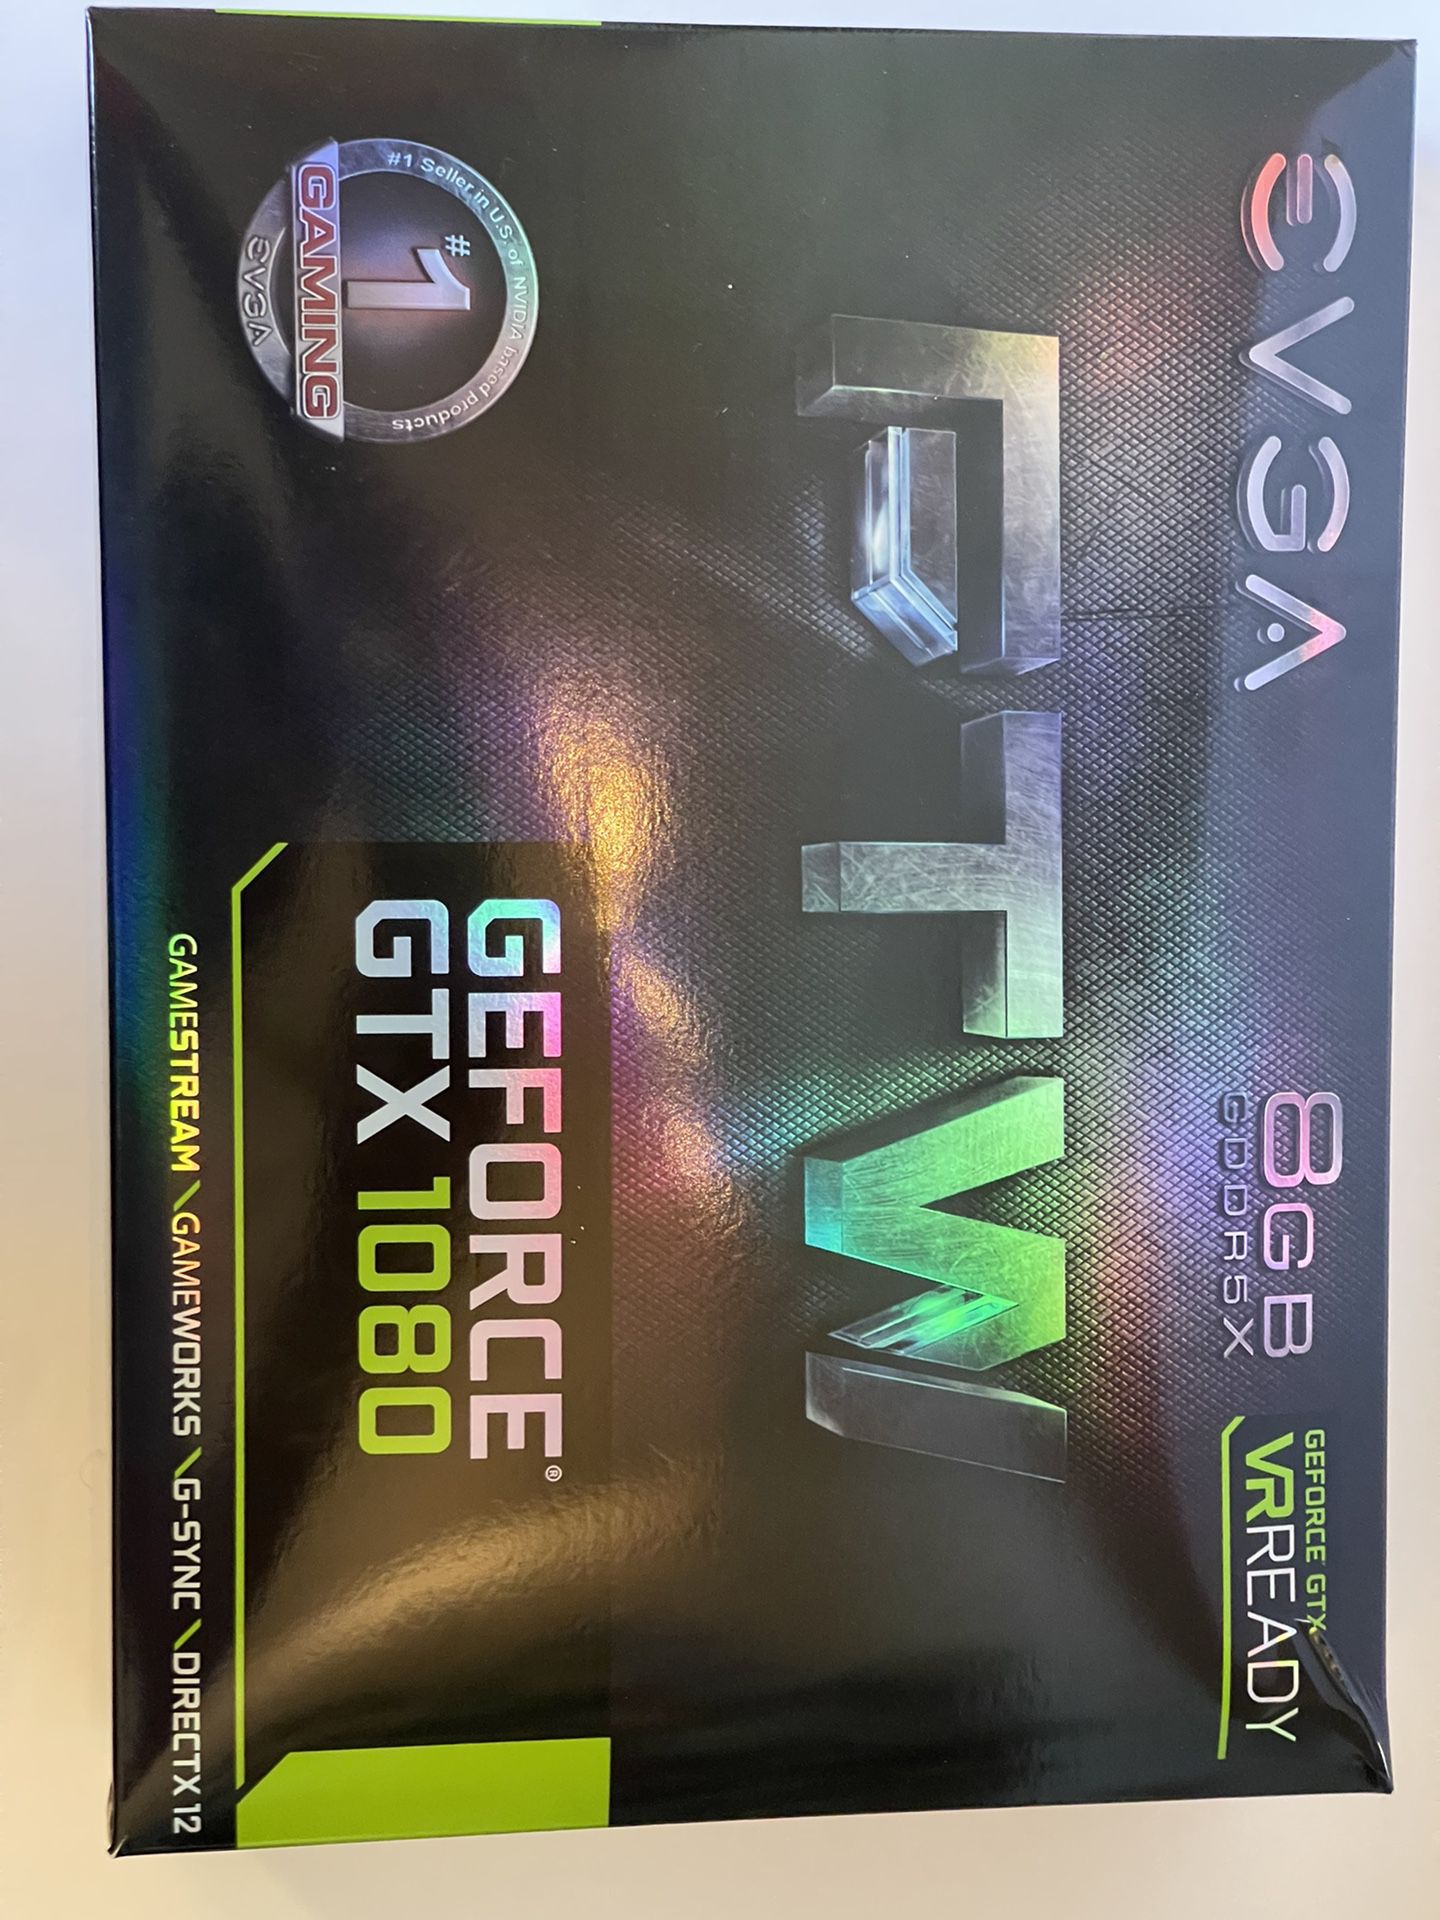 EVGA 1080 FTW Graphics Card